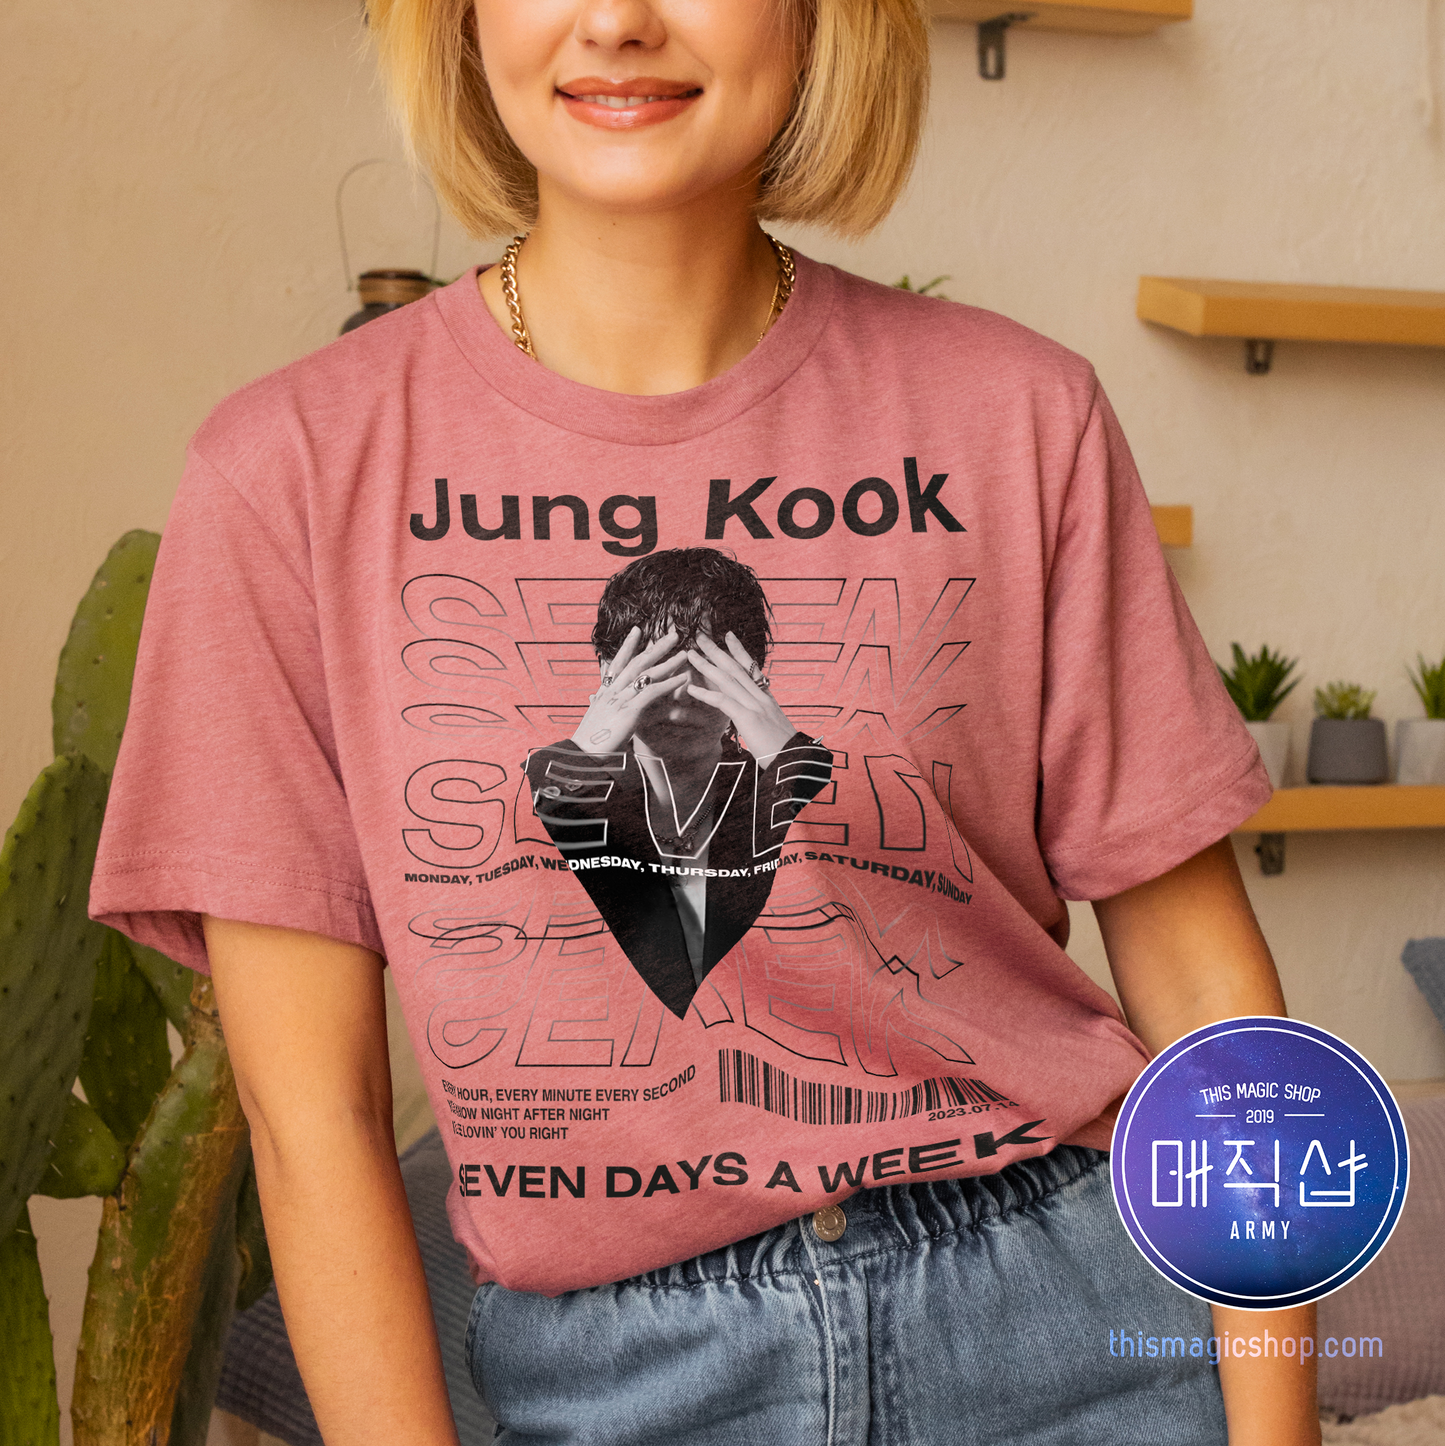 JK Jung Kook "Seven" T-Shirt